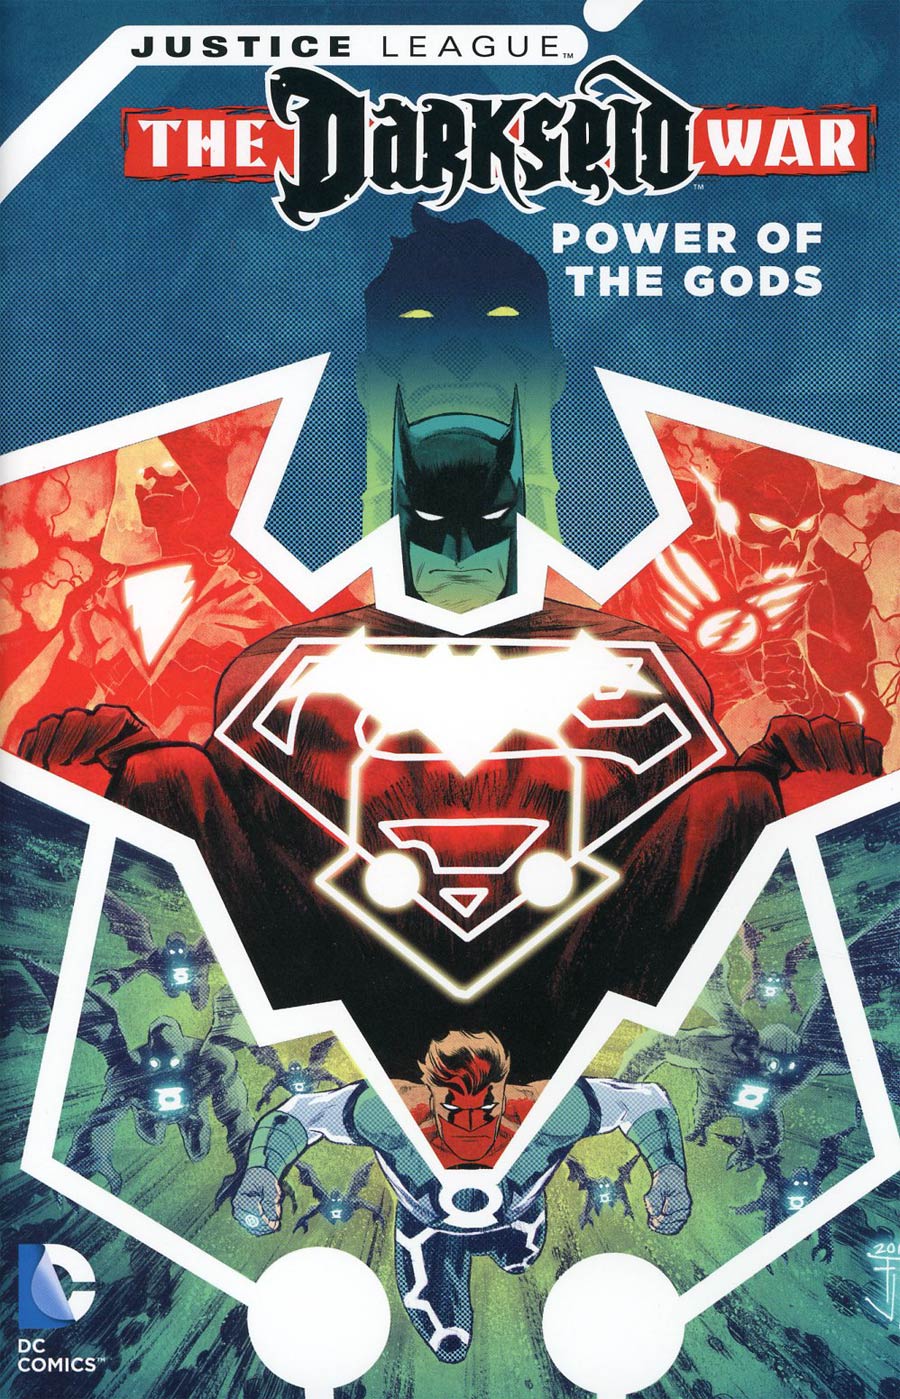 Justice League Darkseid War Power Of The Gods HC (New 52)